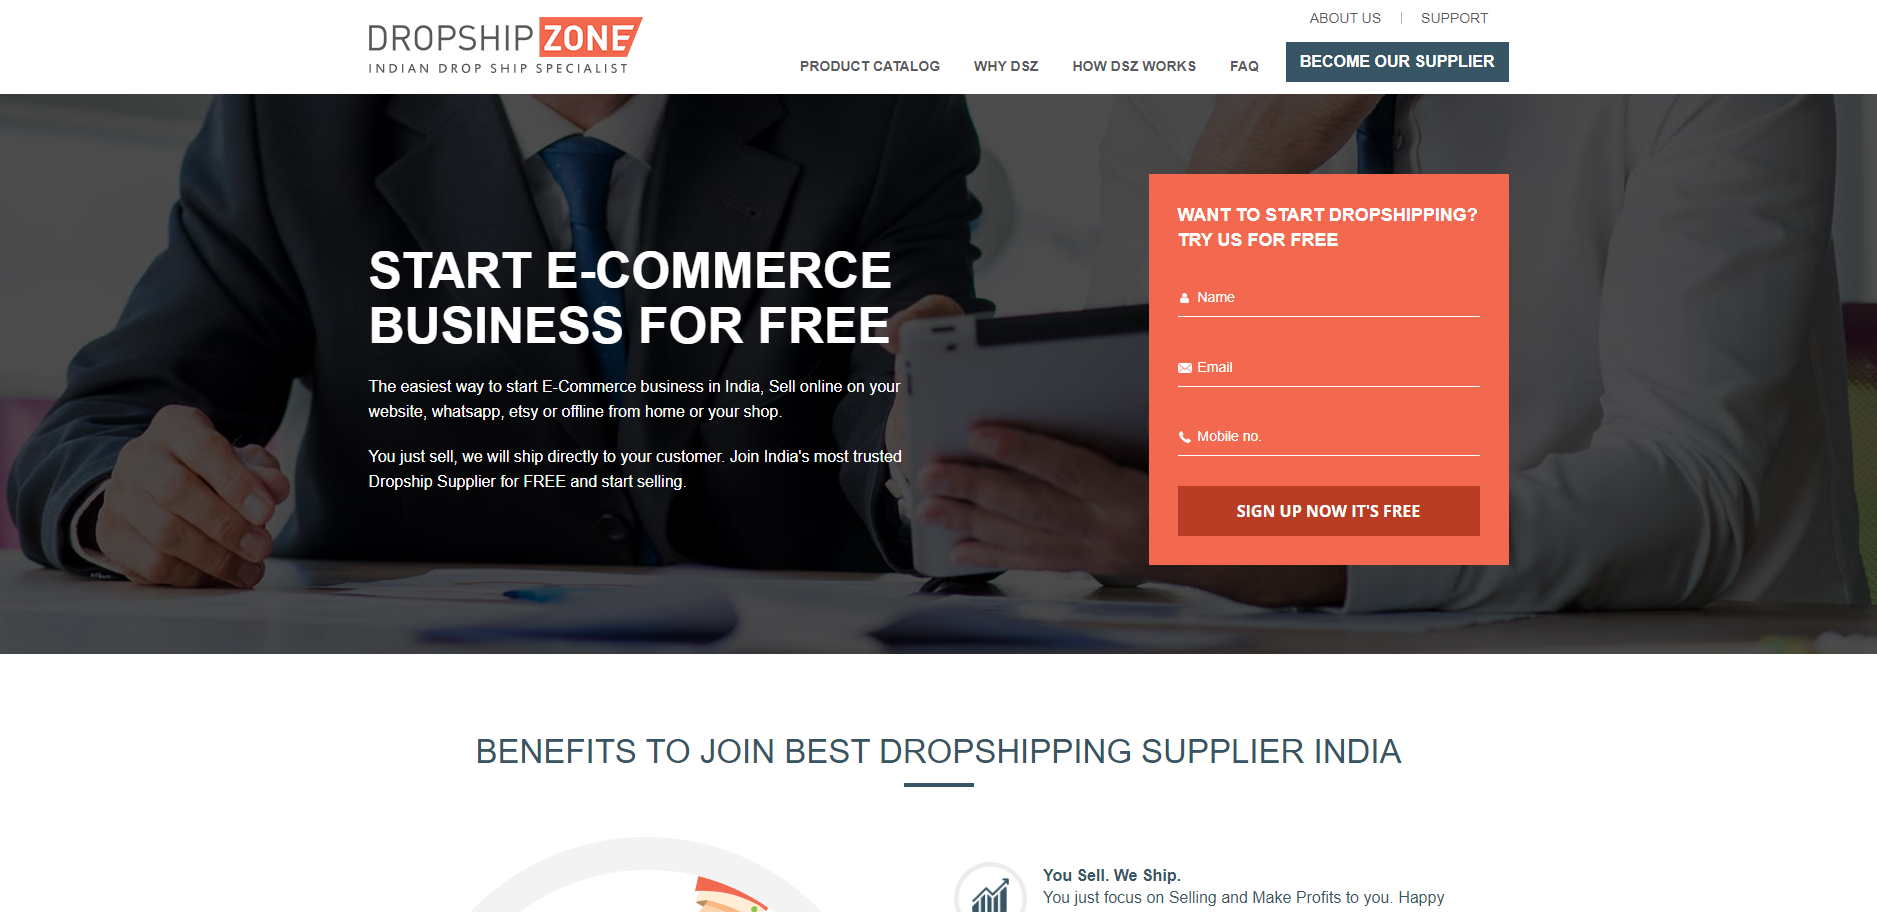 DropshipZone consumer electronics dropship supplier database